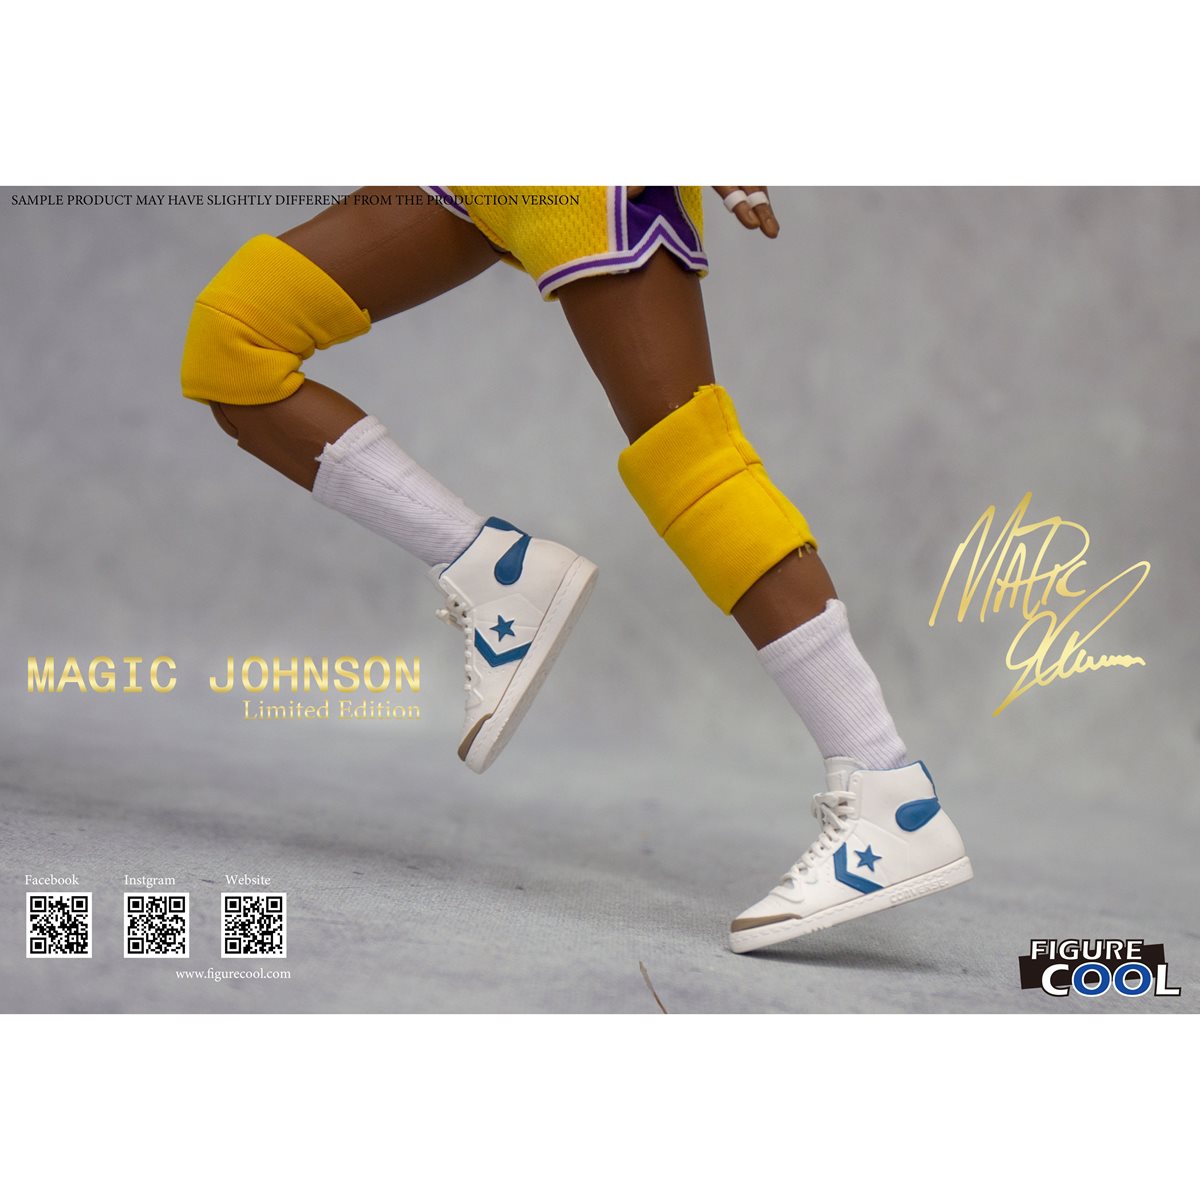 Details about   Figure Cool Magic Johnson 1980s Version 1/6 Scale Limited Edition Action Figure